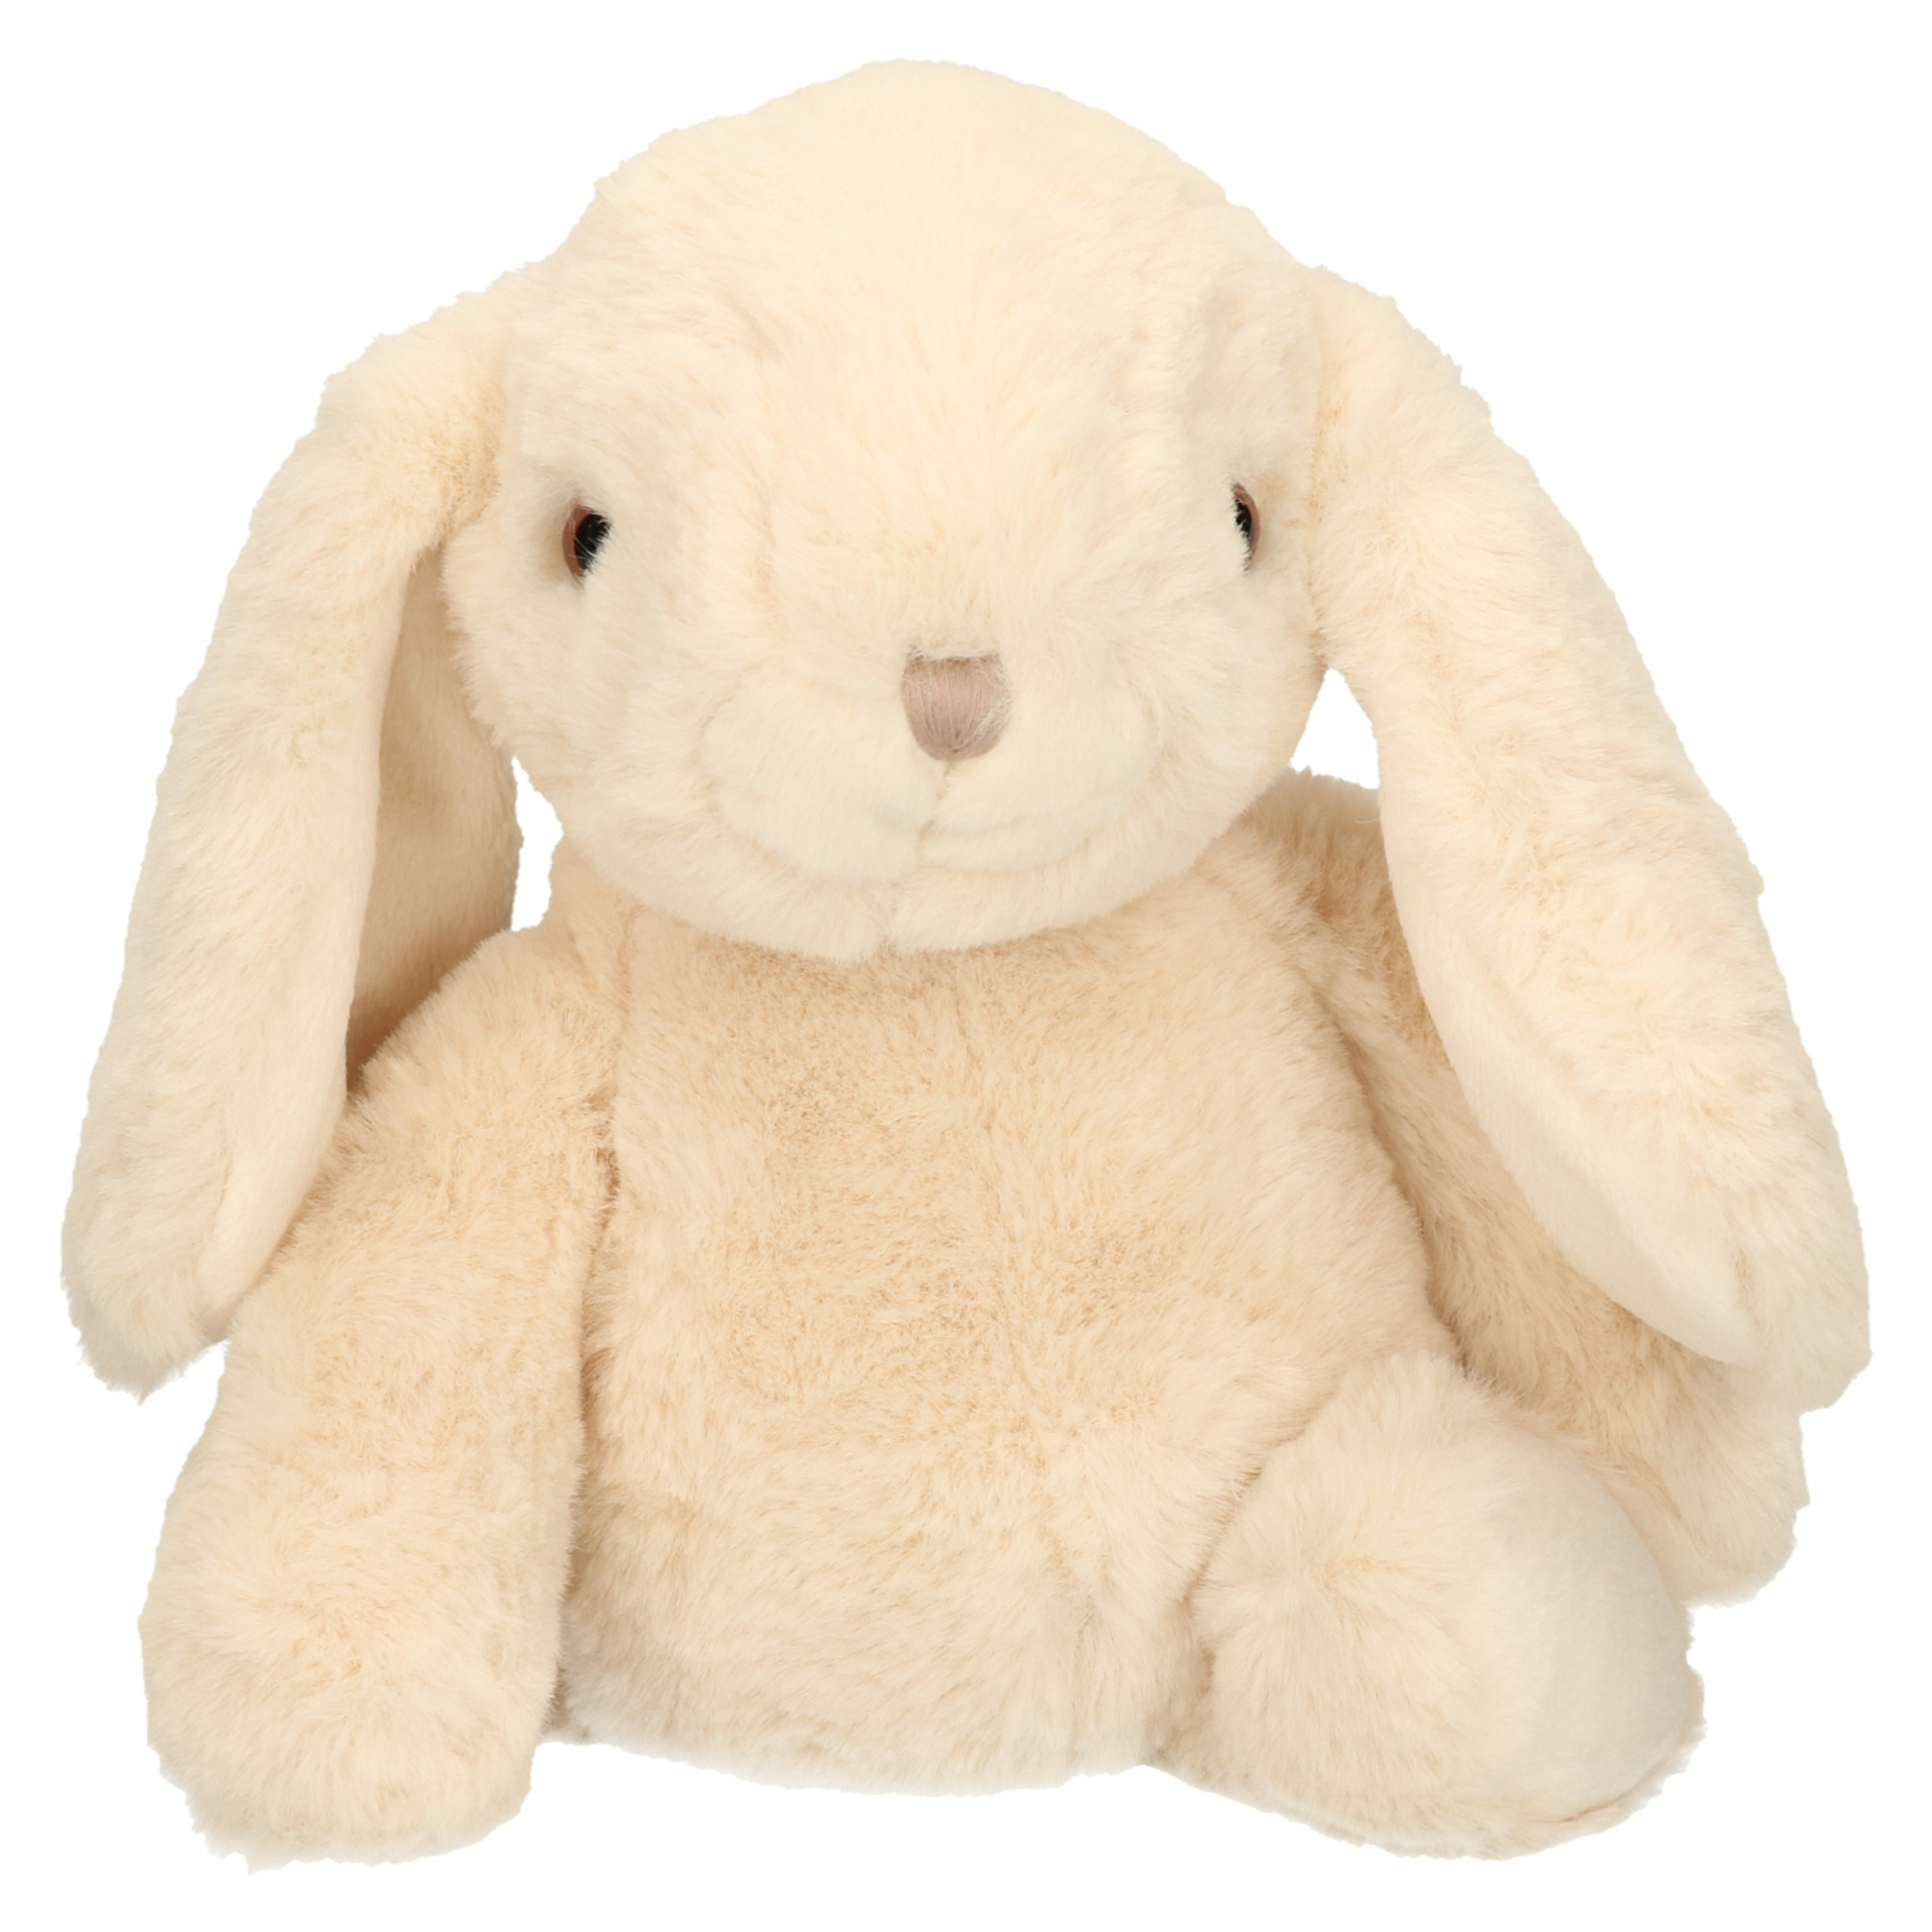 Bukowski pluche konijn knuffeldier creme wit staand 25 cm luxe knuffels